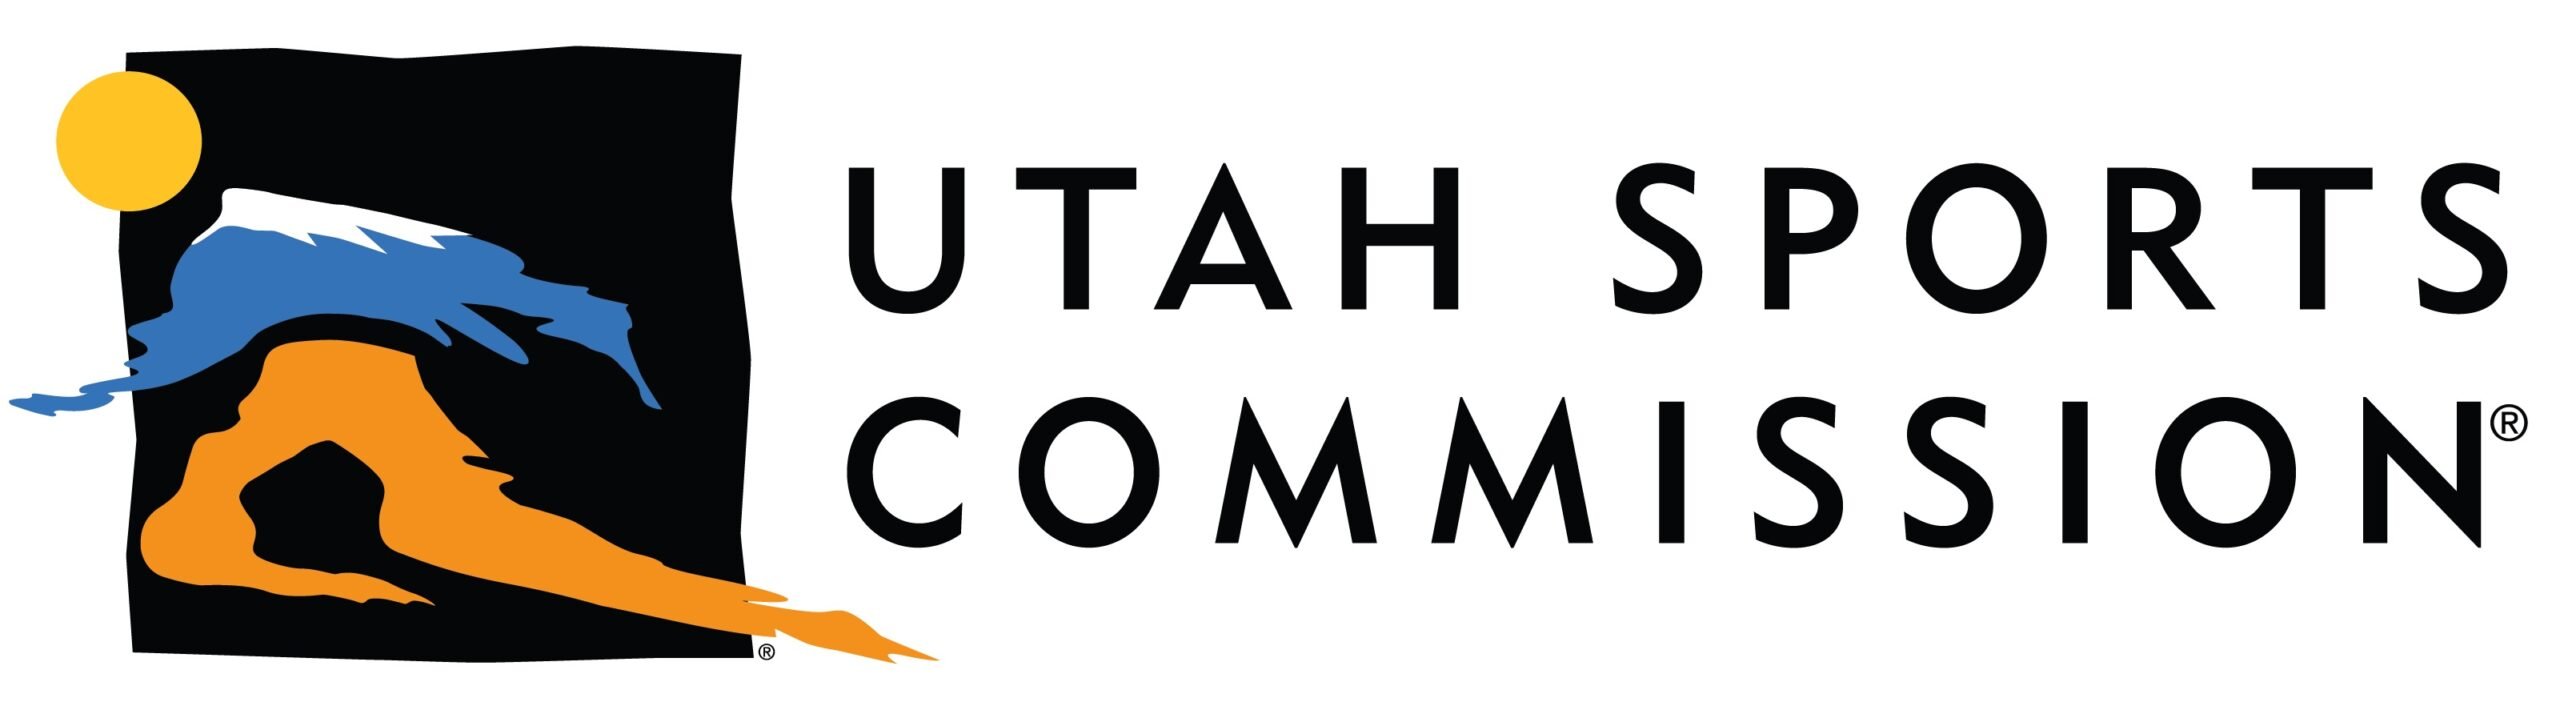 Utah Sports Commission logo